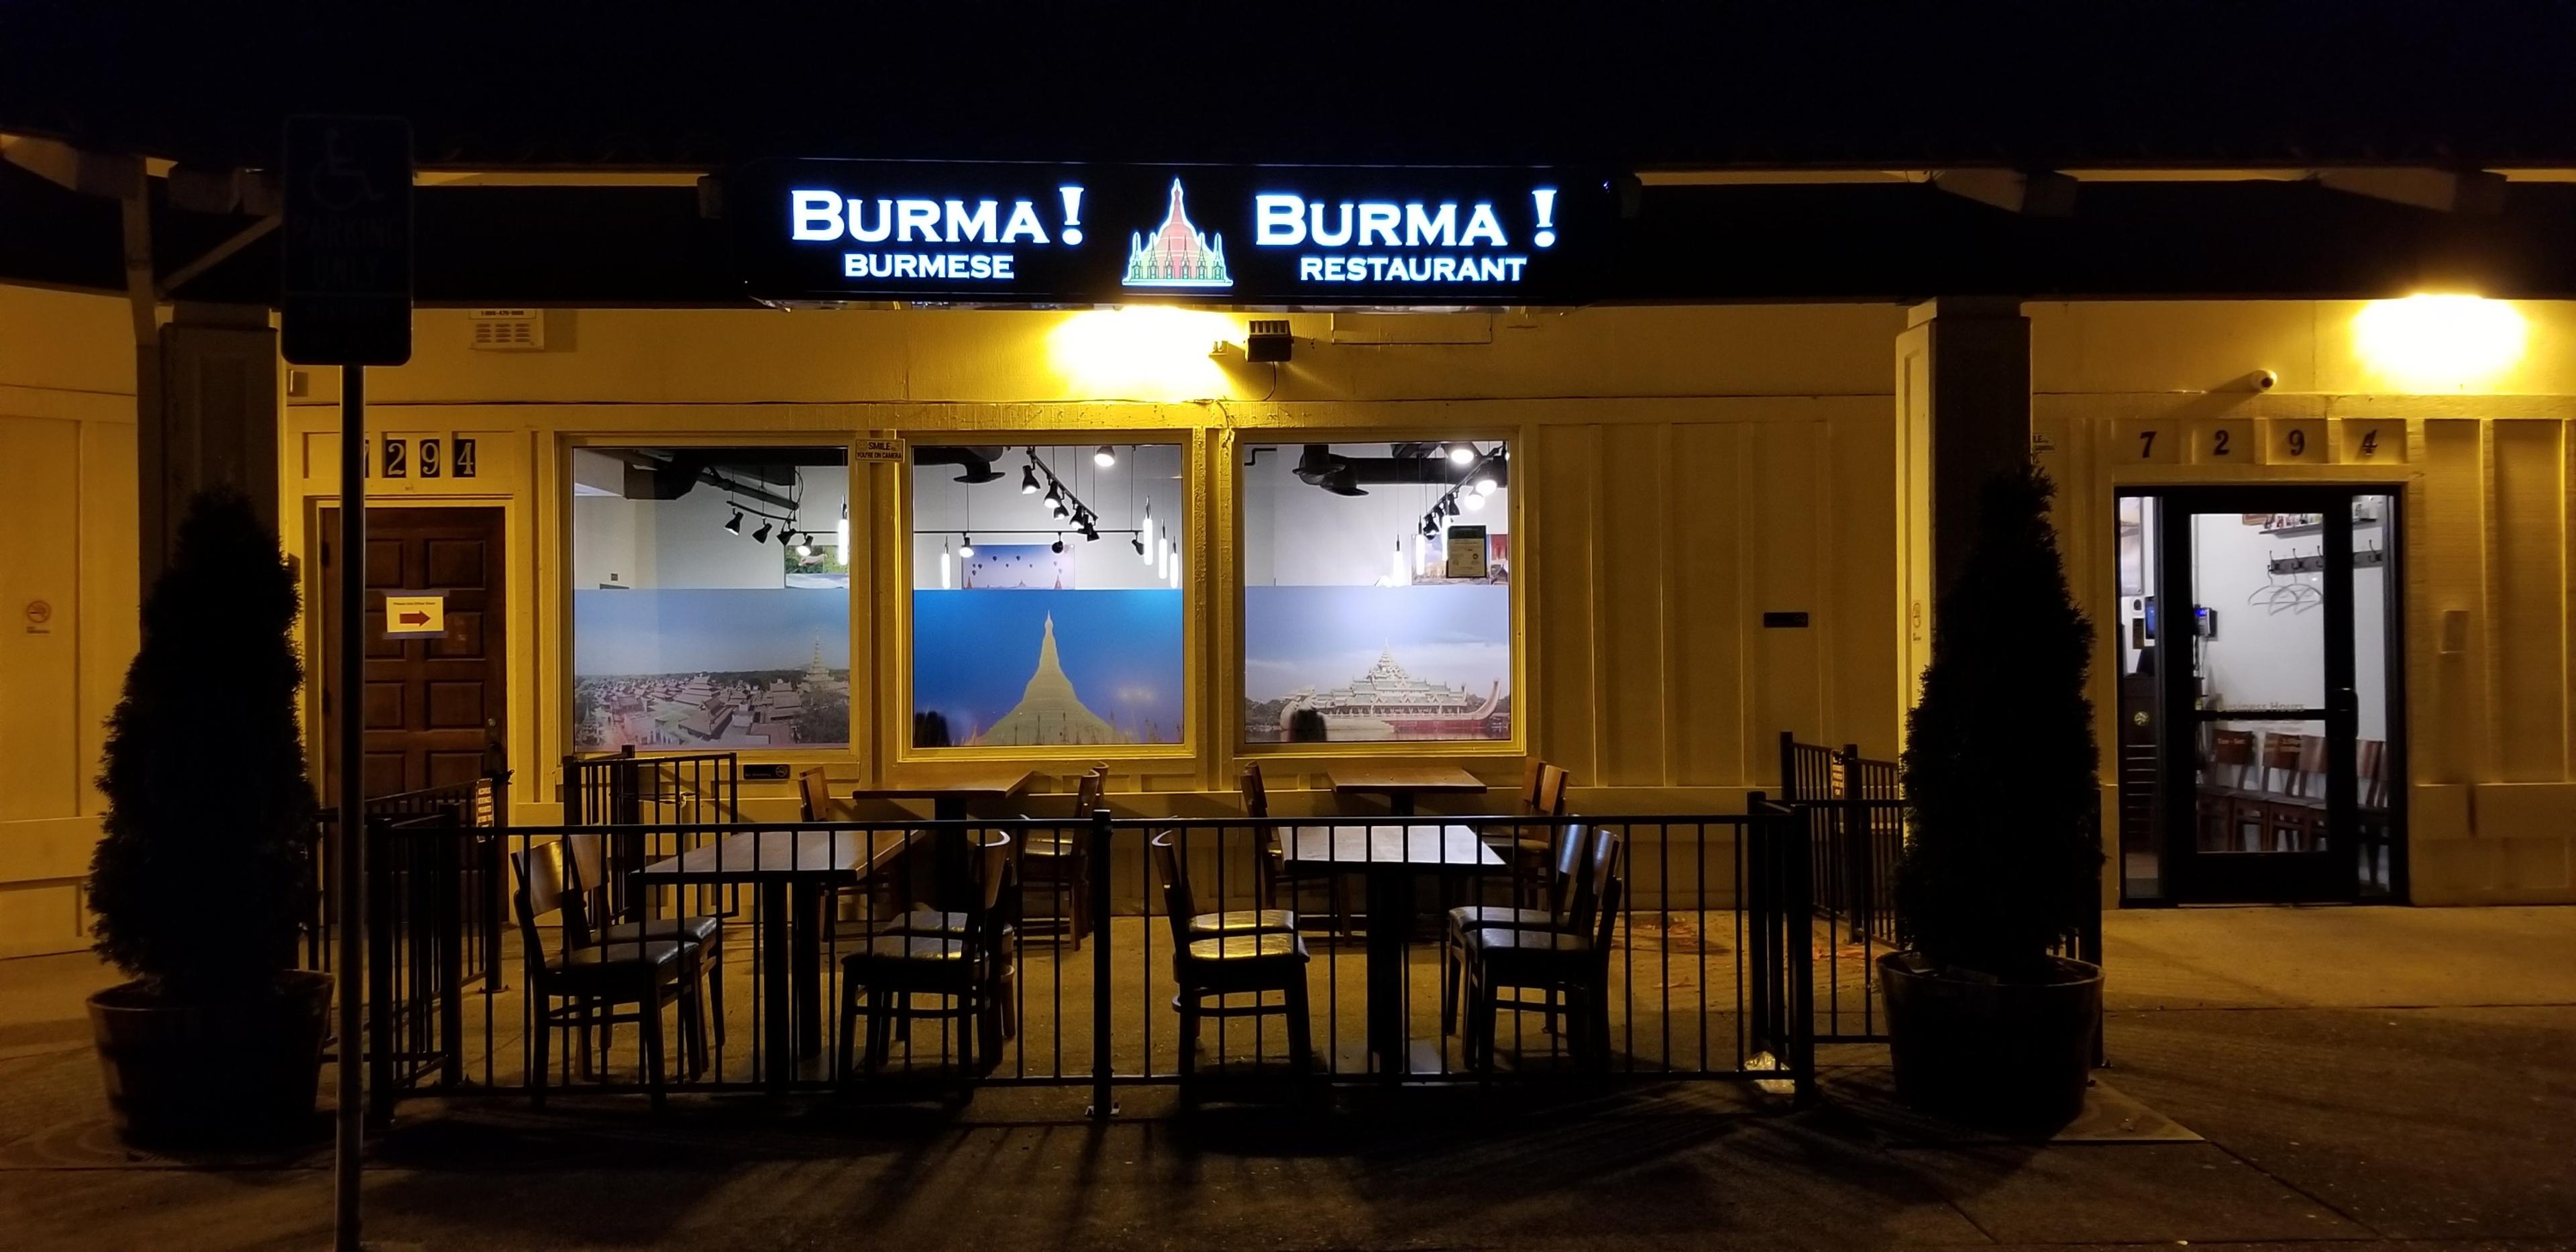 Burma！Burma！